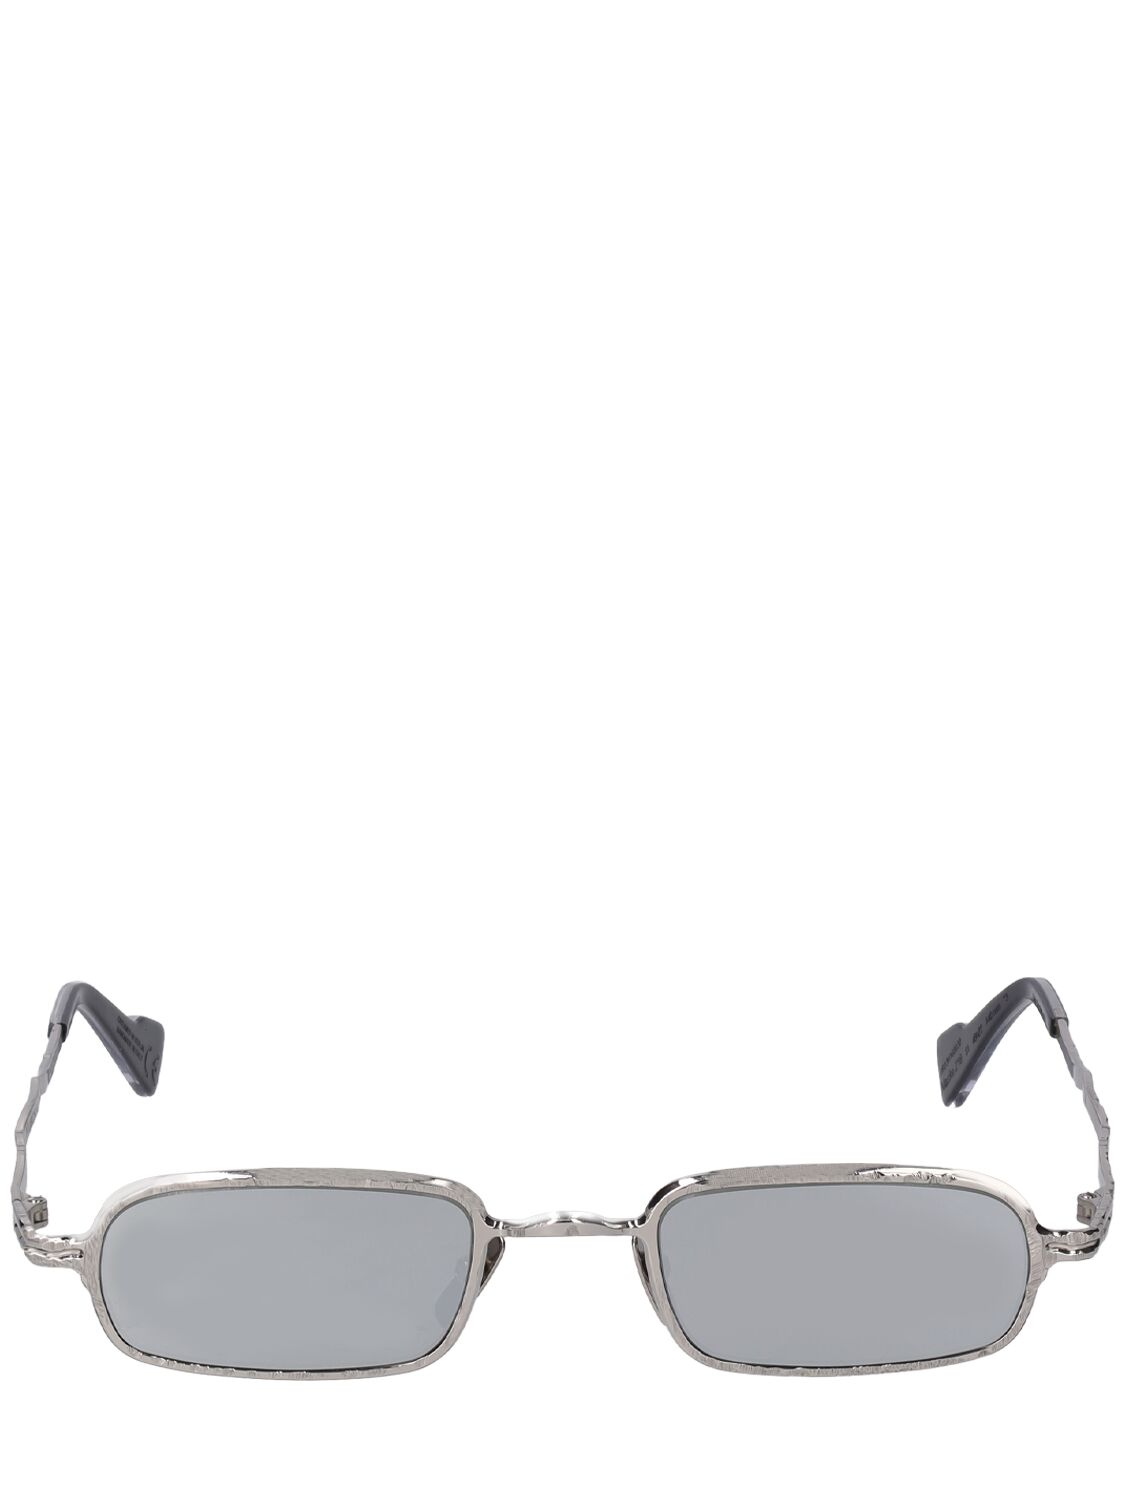 Kuboraum Berlin Z18 Squared Sunglasses In Silver